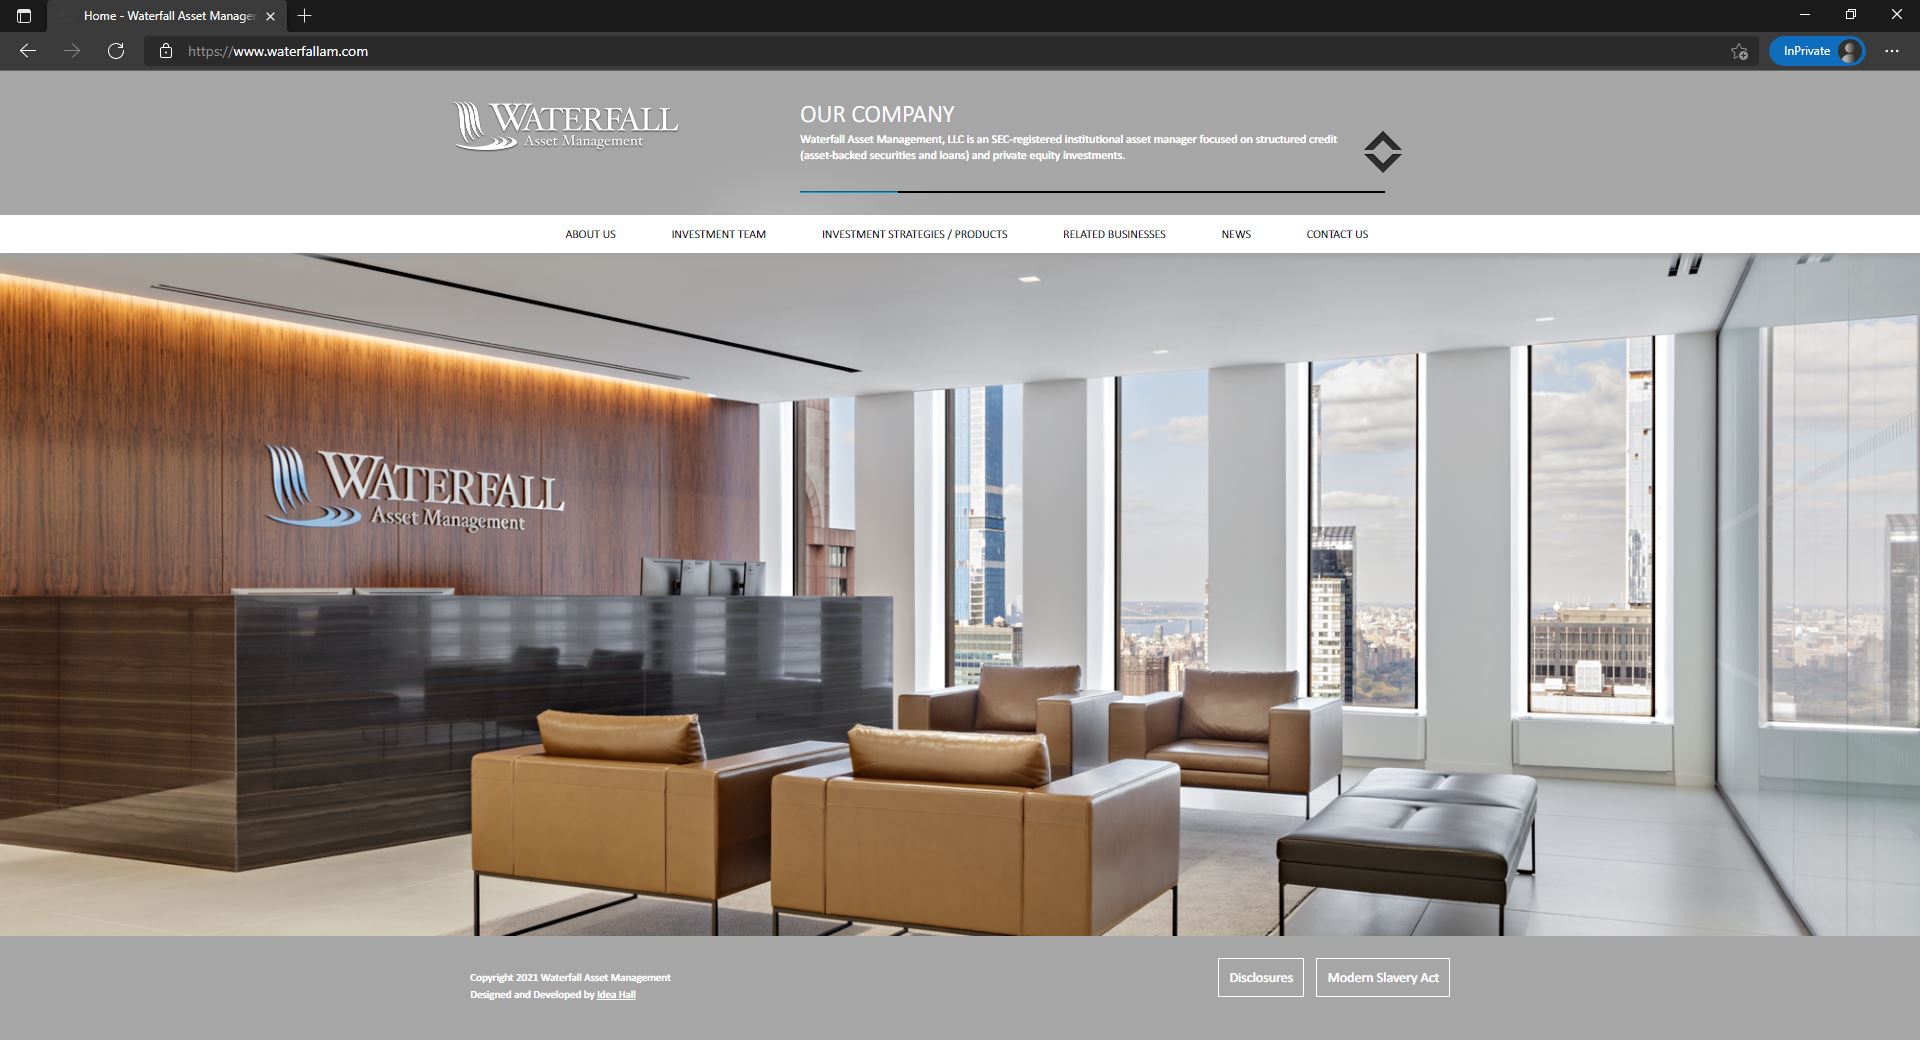 Waterfall Asset Management website homepage